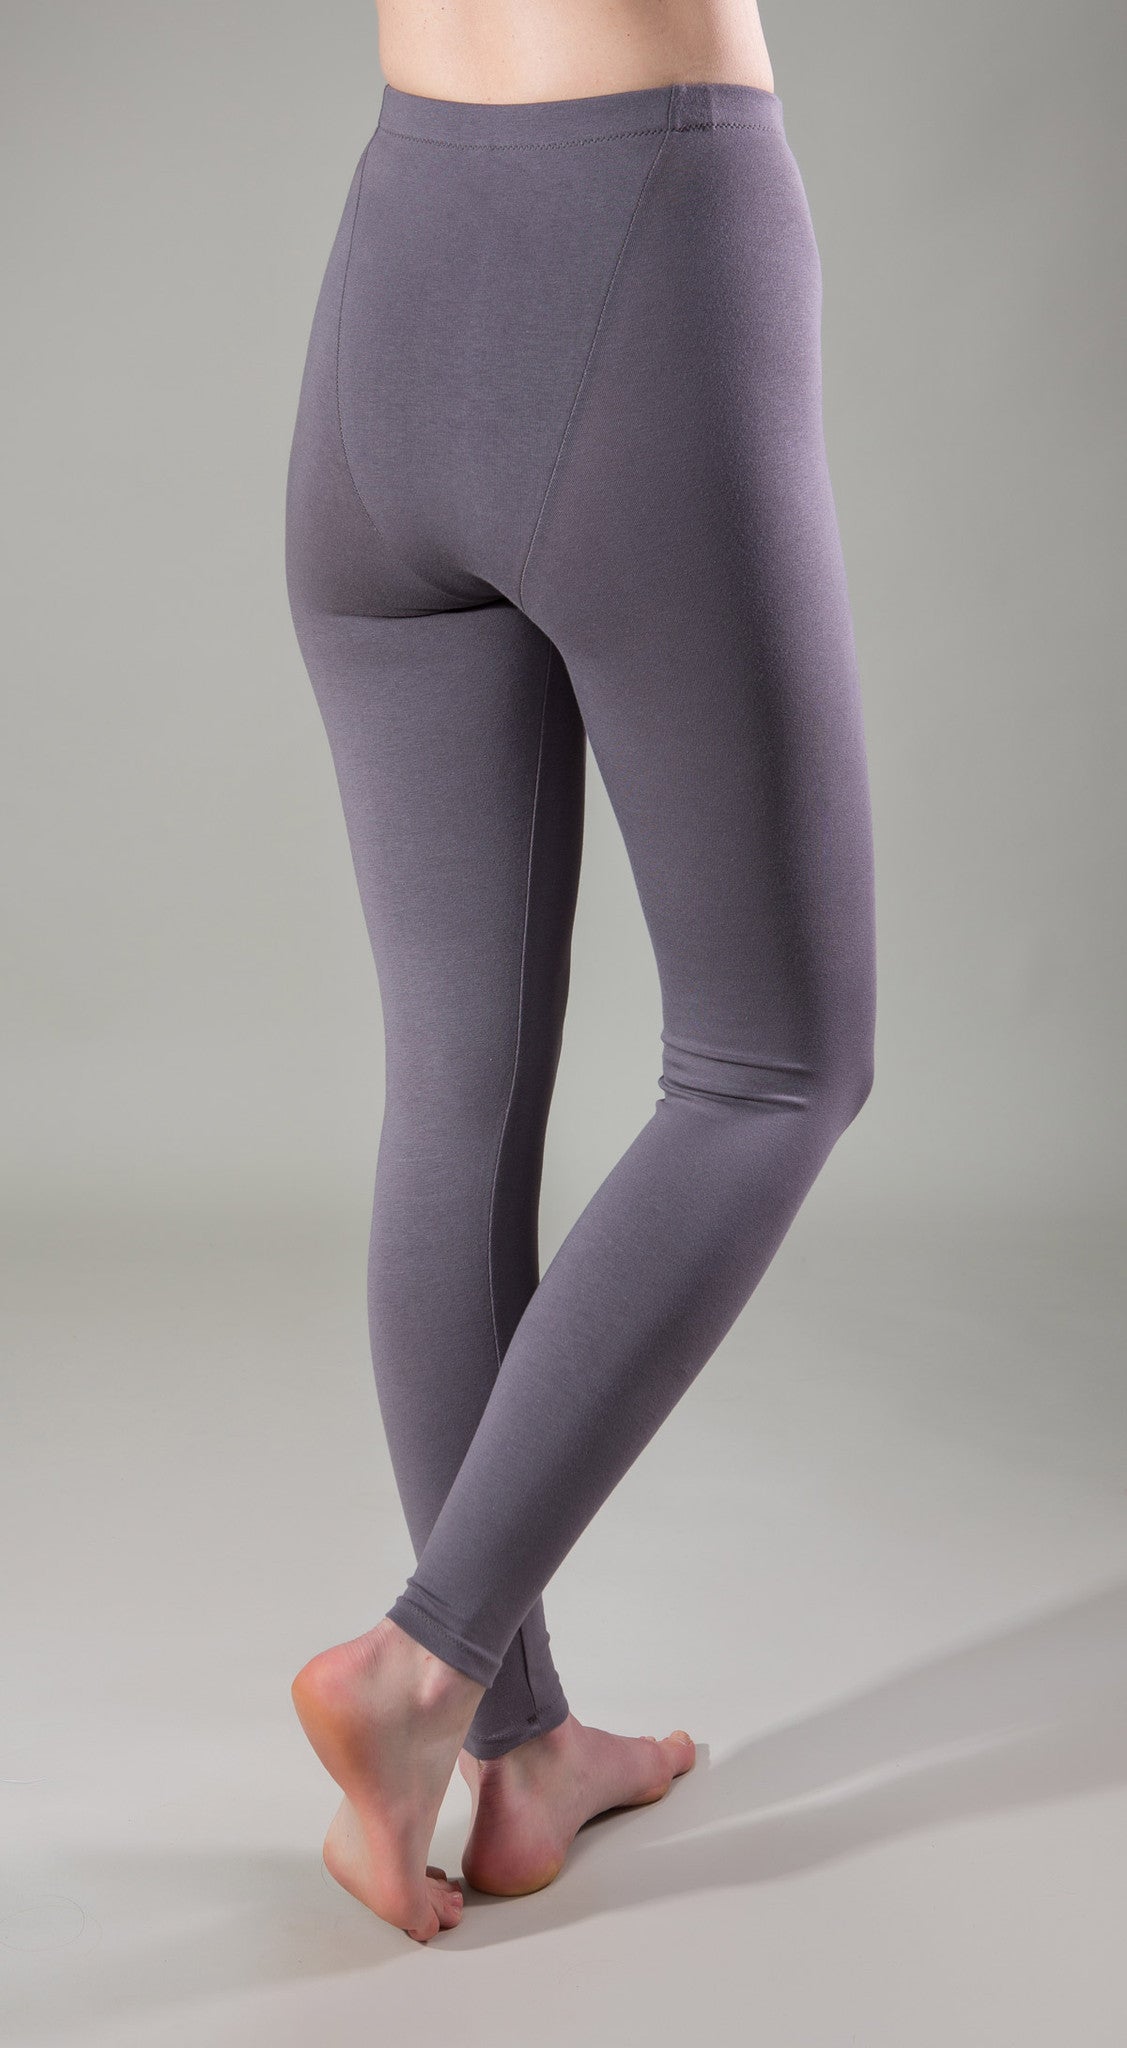 LEOHEX High Waist Satin Gloss Leggings For Women Shiny Ankle Length Tights,  Japanese Style Glitter Pants From Kong003, $27.43 | DHgate.Com